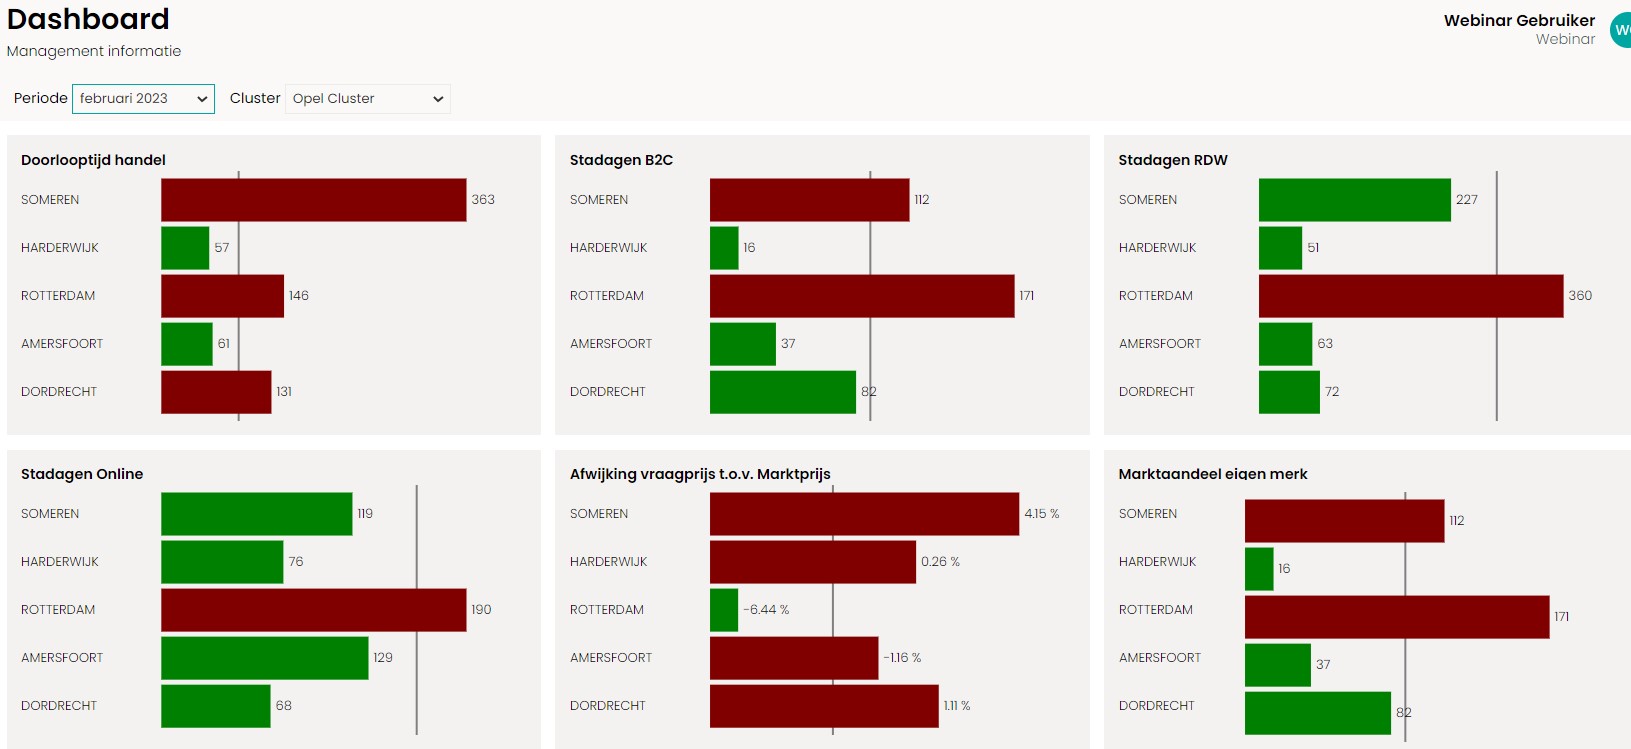 KPI's managen met Dashboard functionaliteit - VWE Occasion Manager